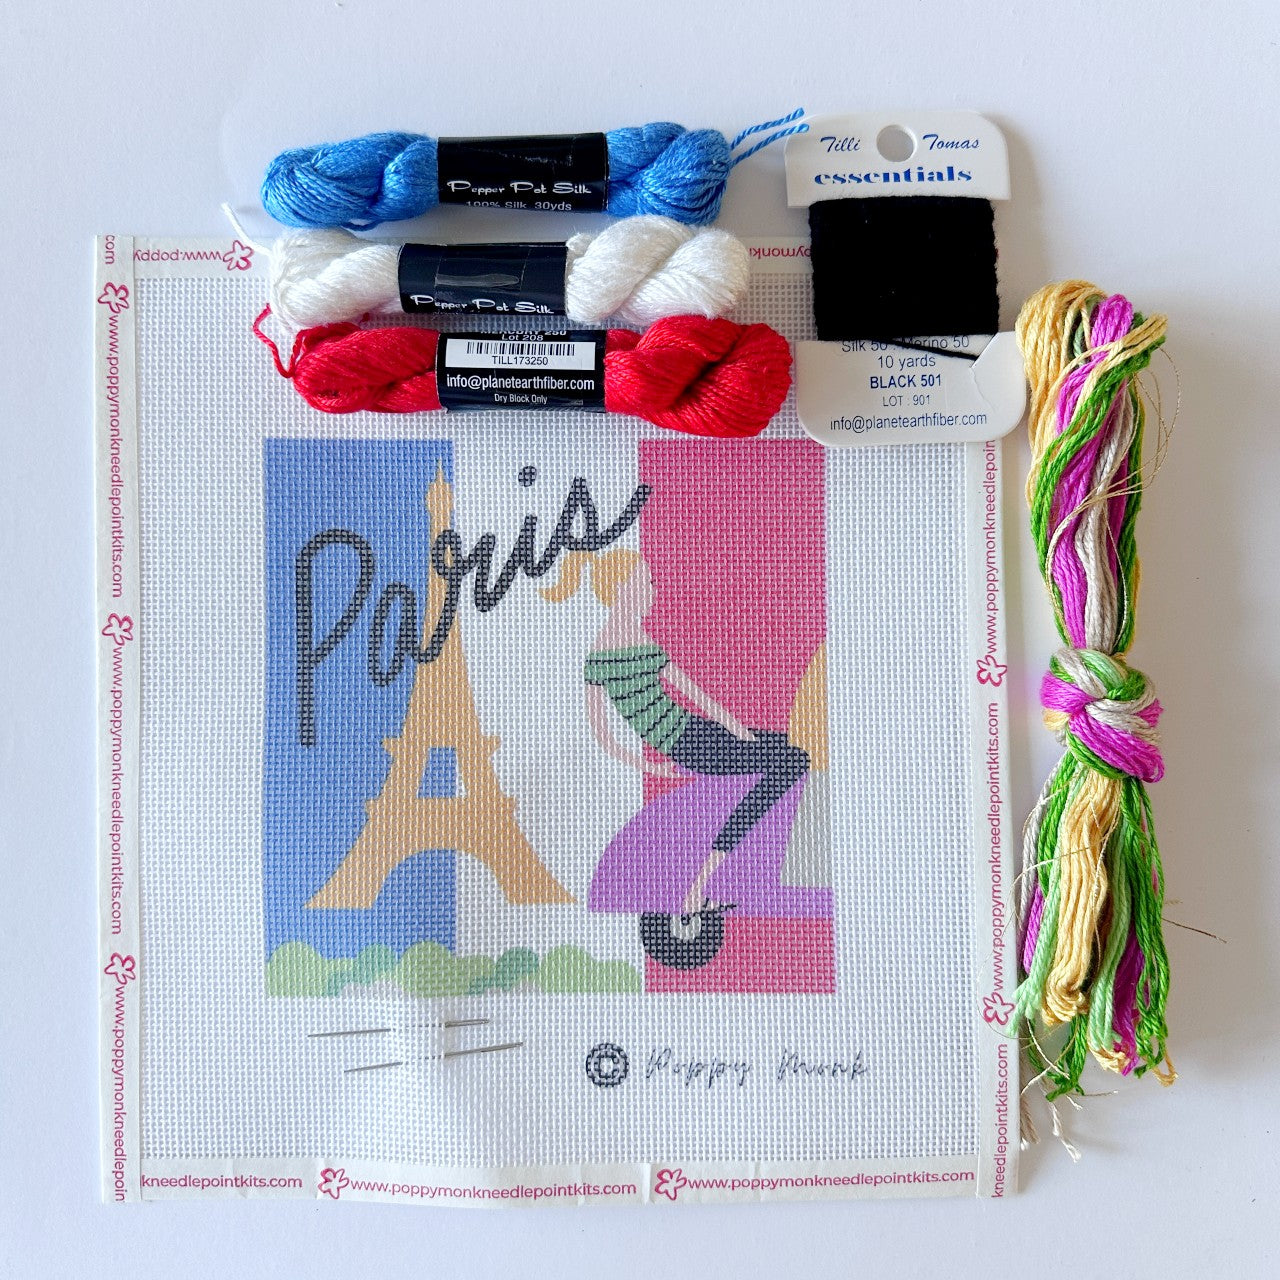 Paris needlepoint kit with silk threads.